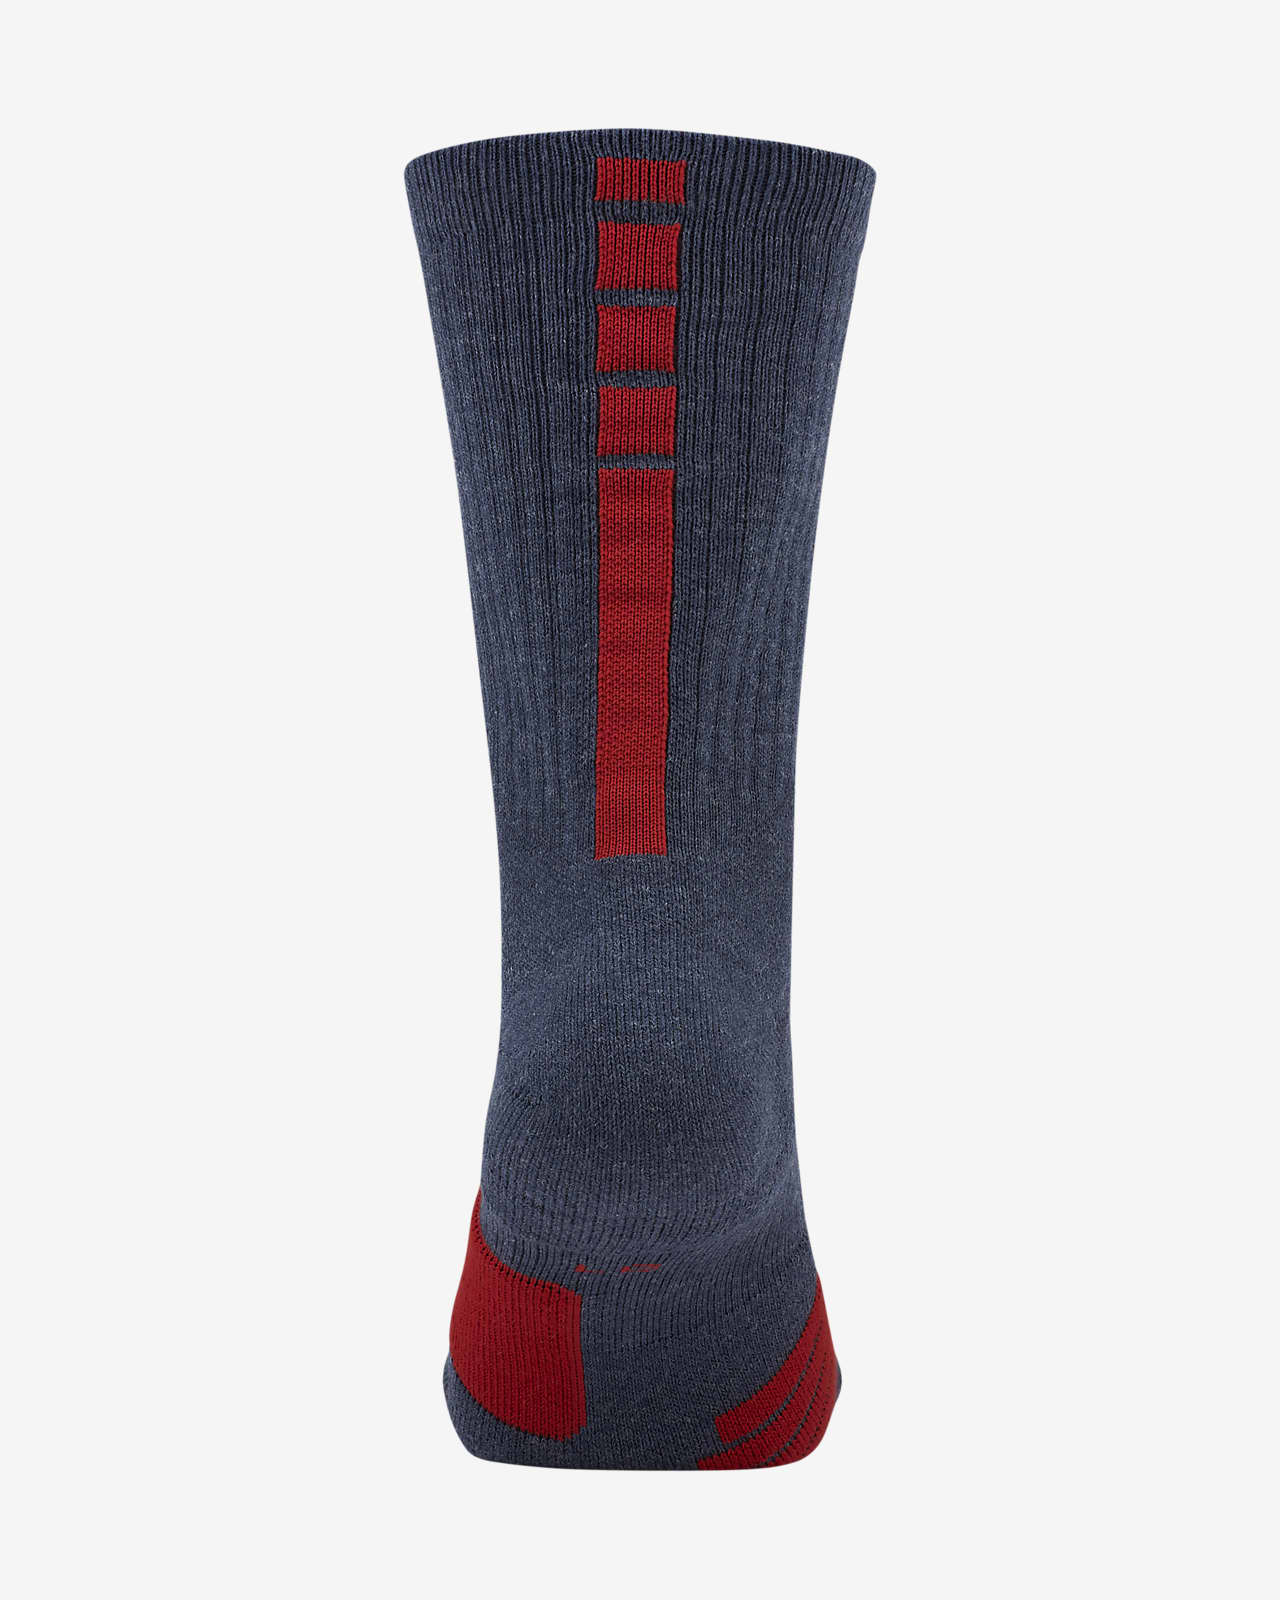 nike elite socks sales